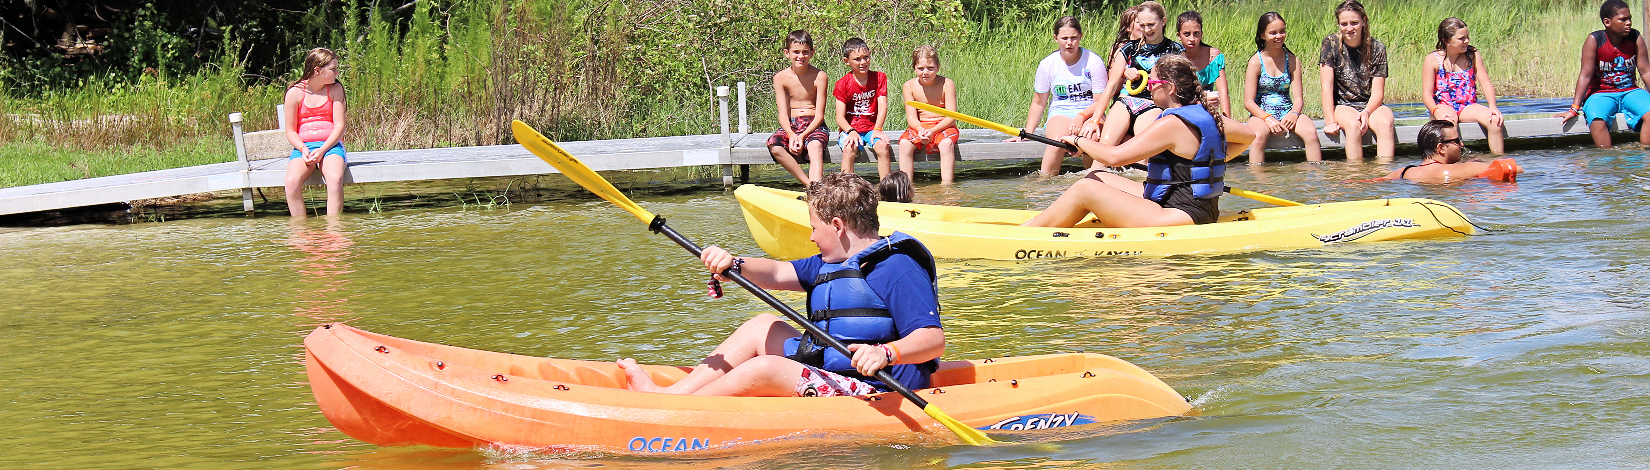 4-H youth kayaking at Camp Cloverleaf